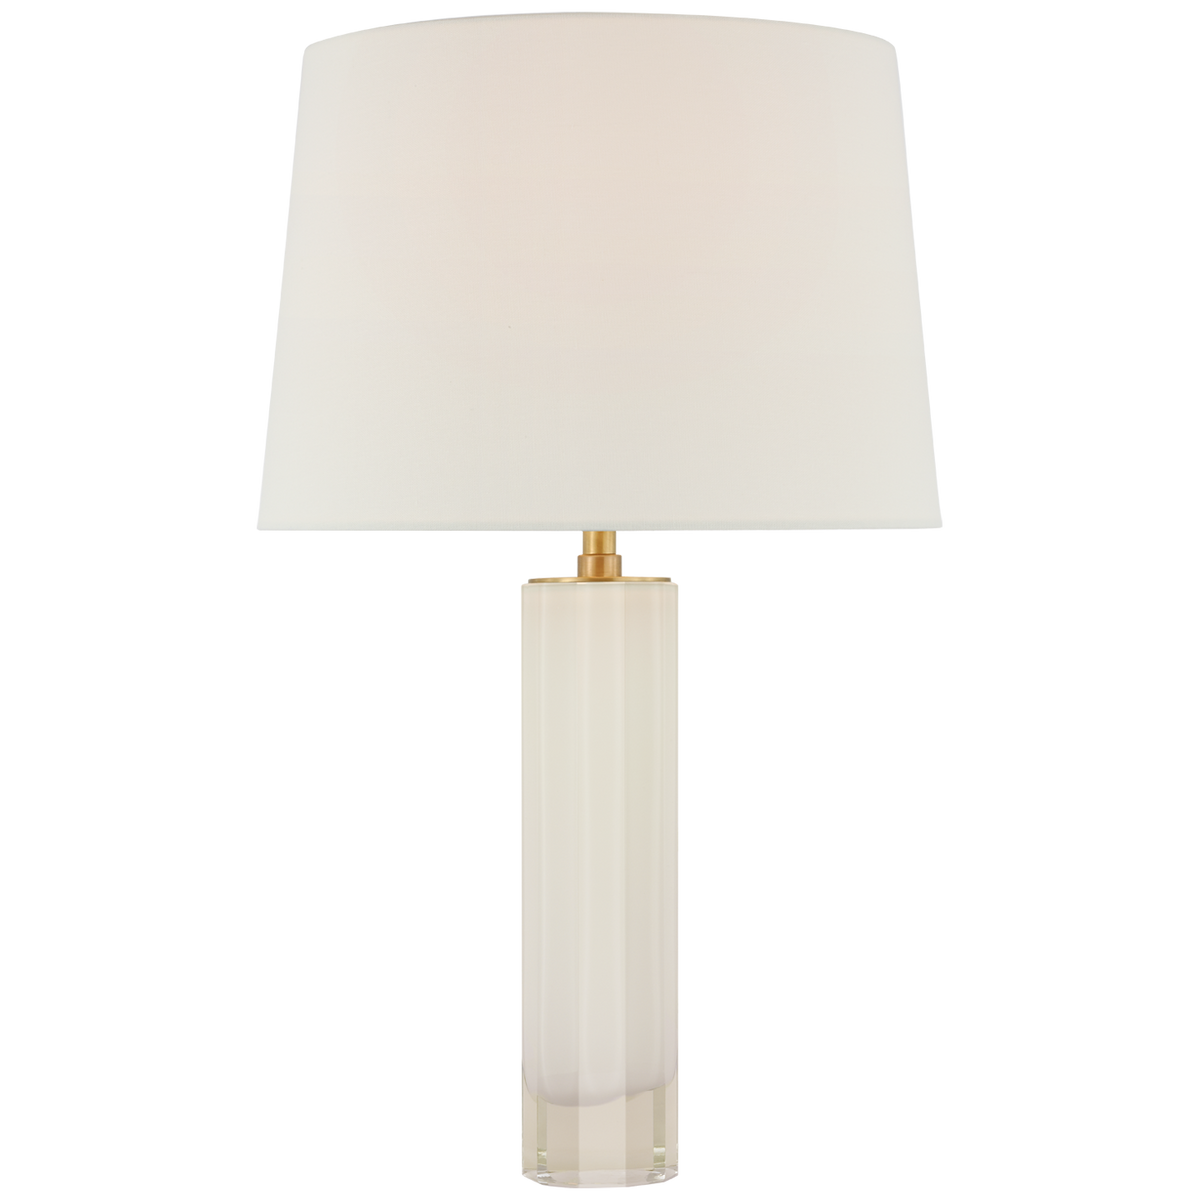 Fallon Table Lamp Medium - White Glass with Linen Shade